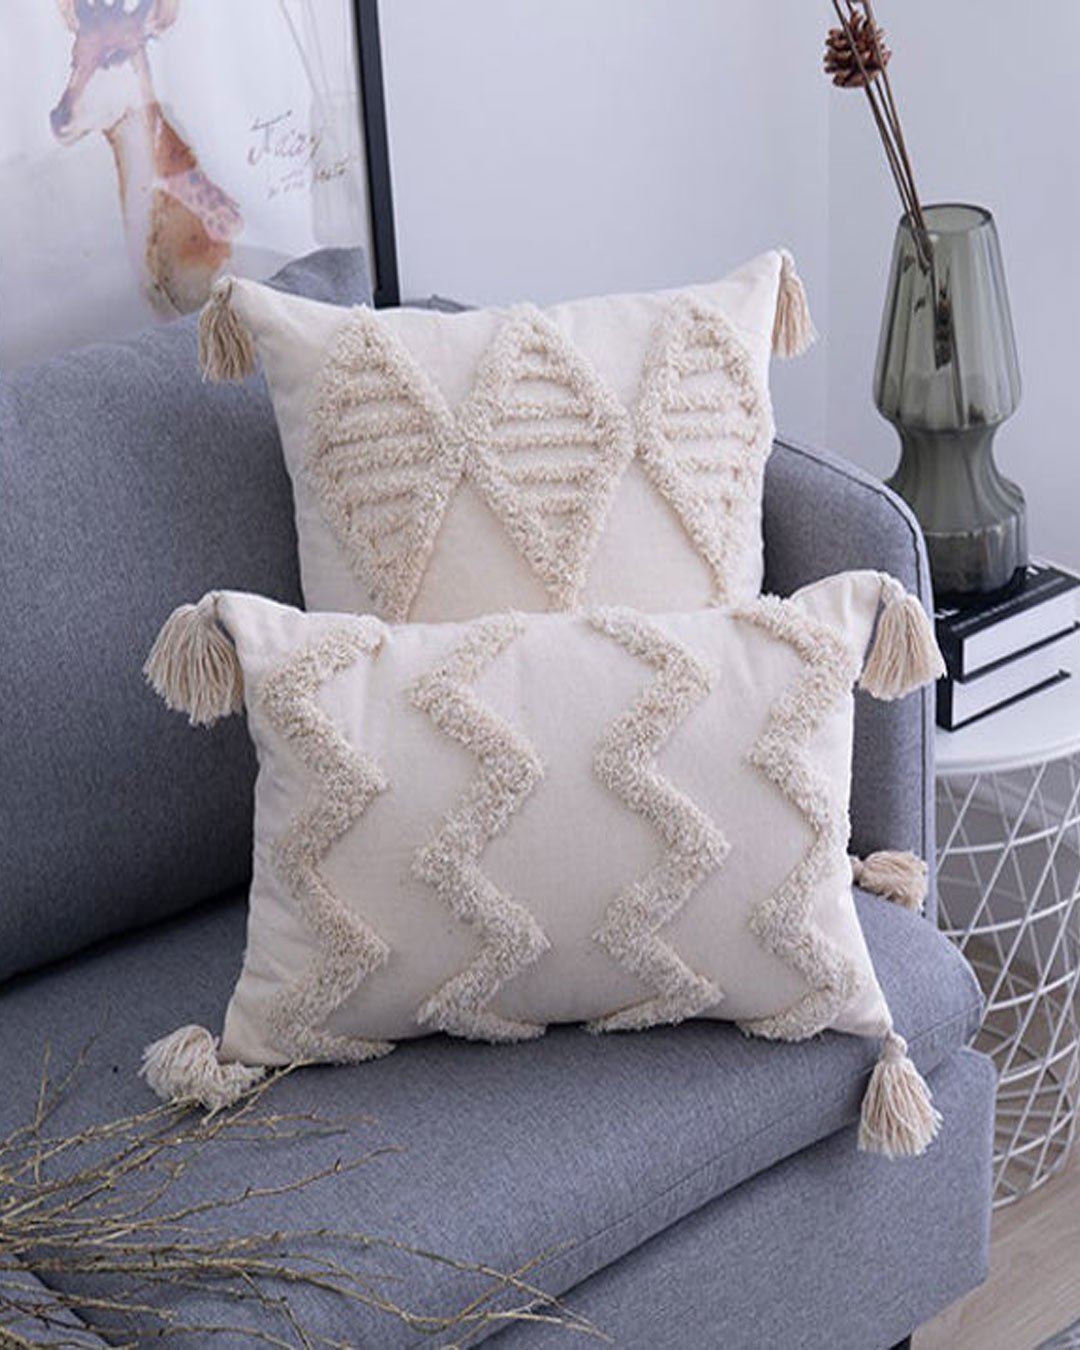 wedding registry ideas decorative pillows ornaments